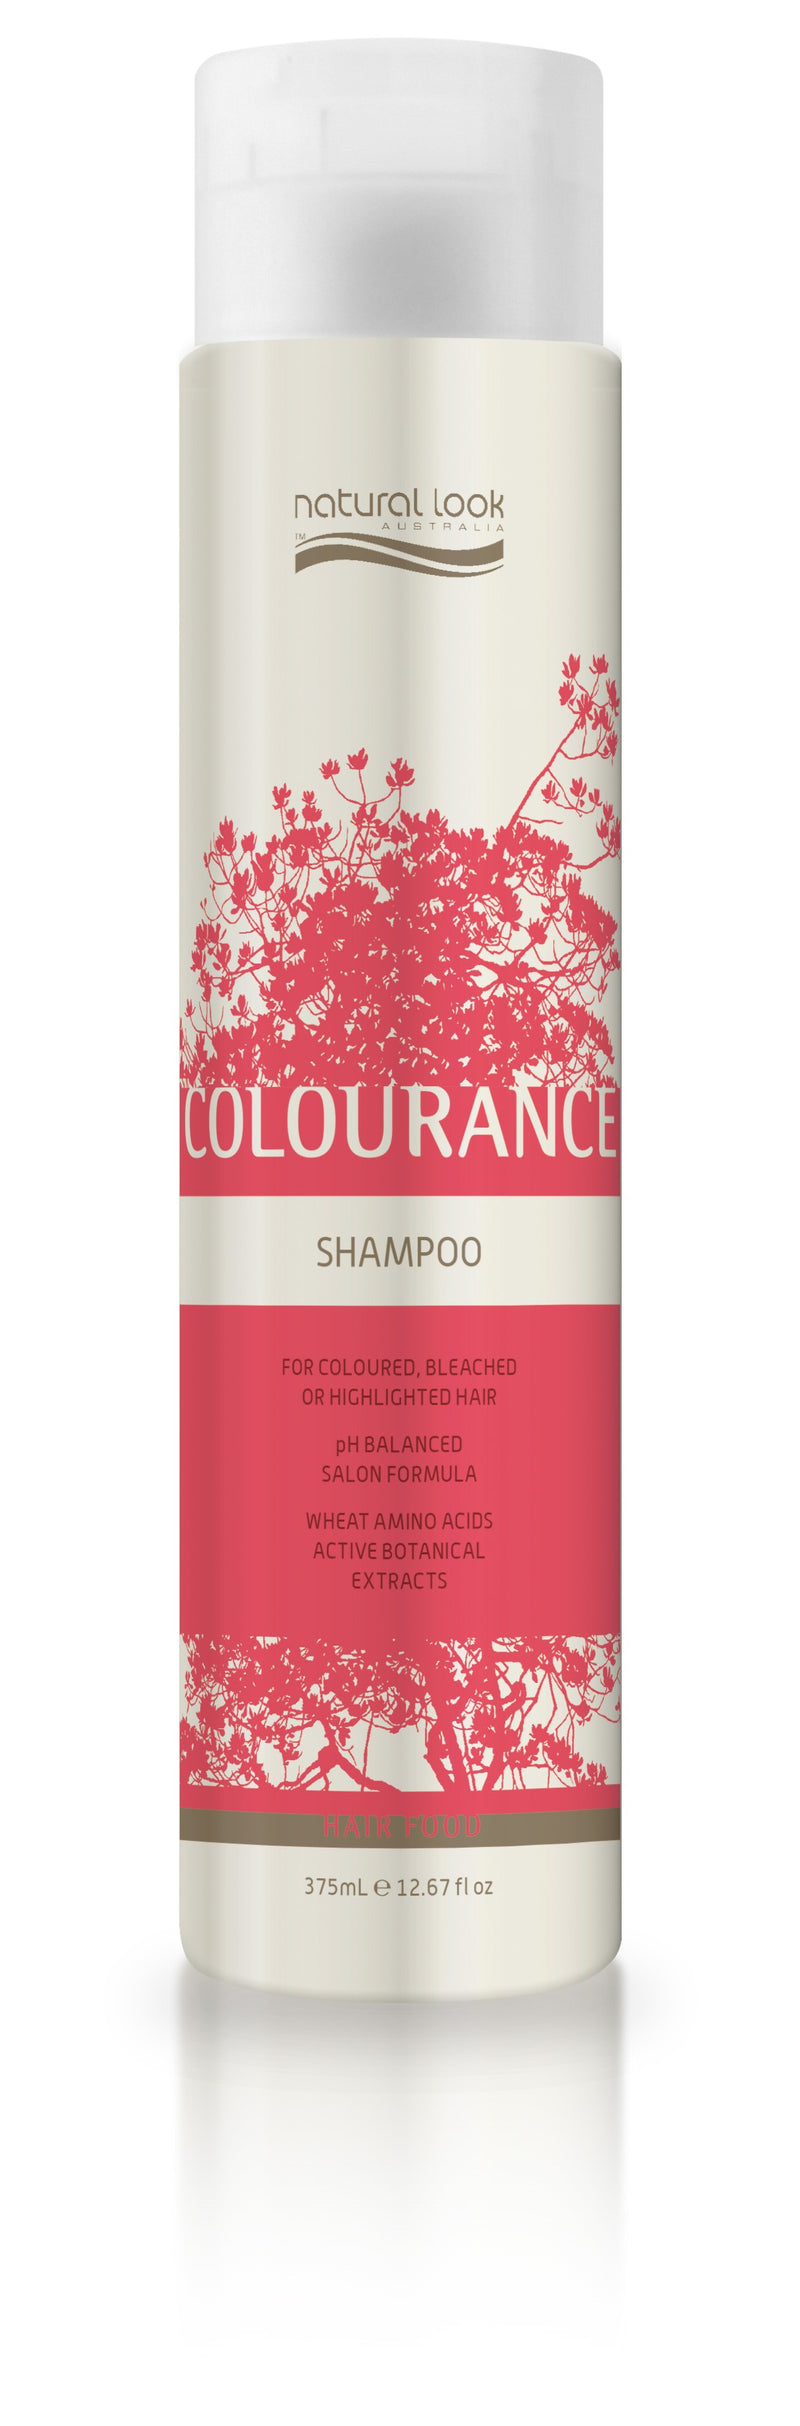 Natural Look Colourance Shine Enhancing Shampoo 375ml